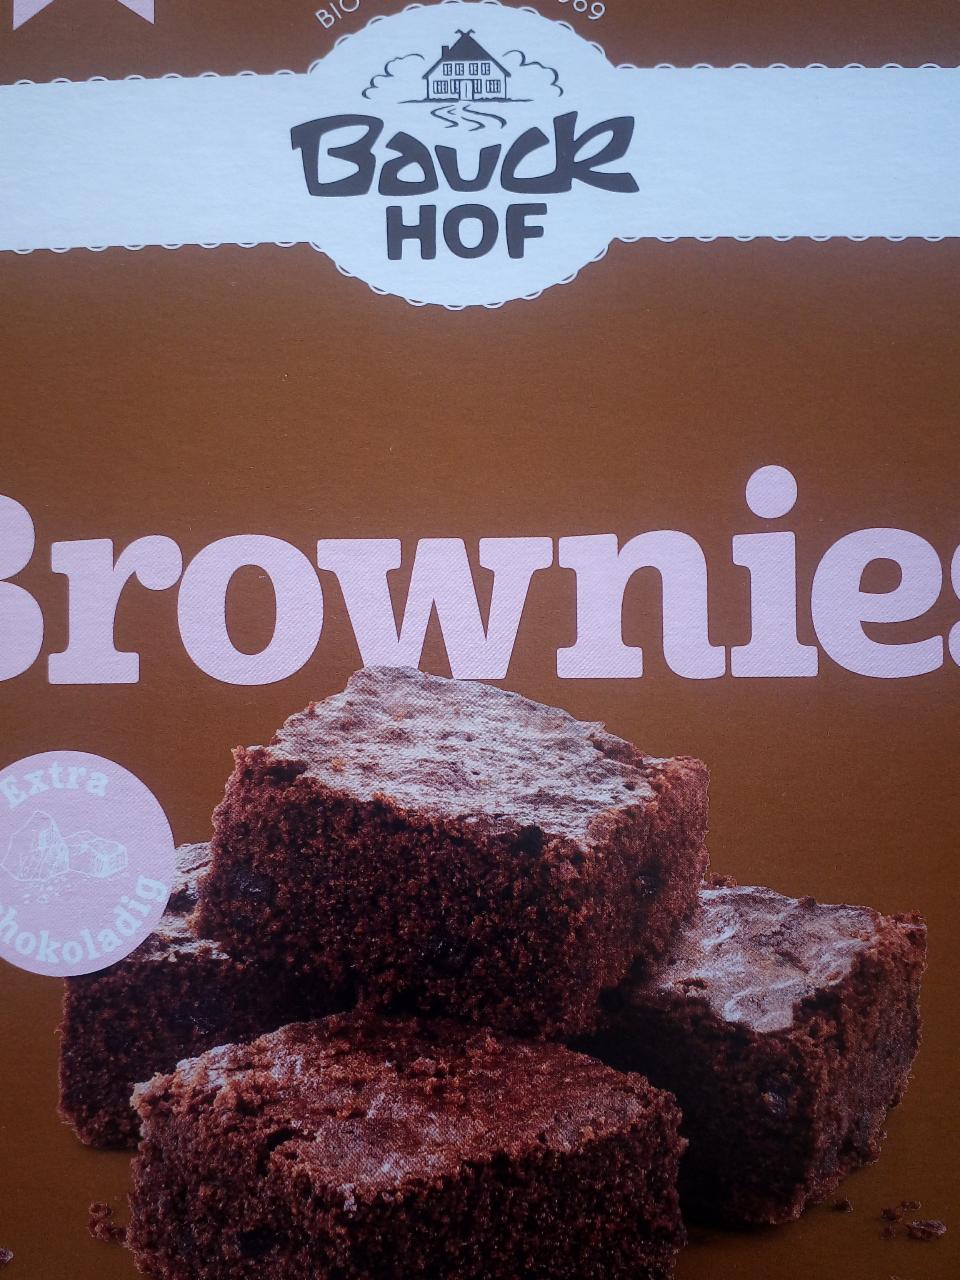 Fotografie - Bio Brownies Extra Schokoladig glutenfrei Bauck Hof